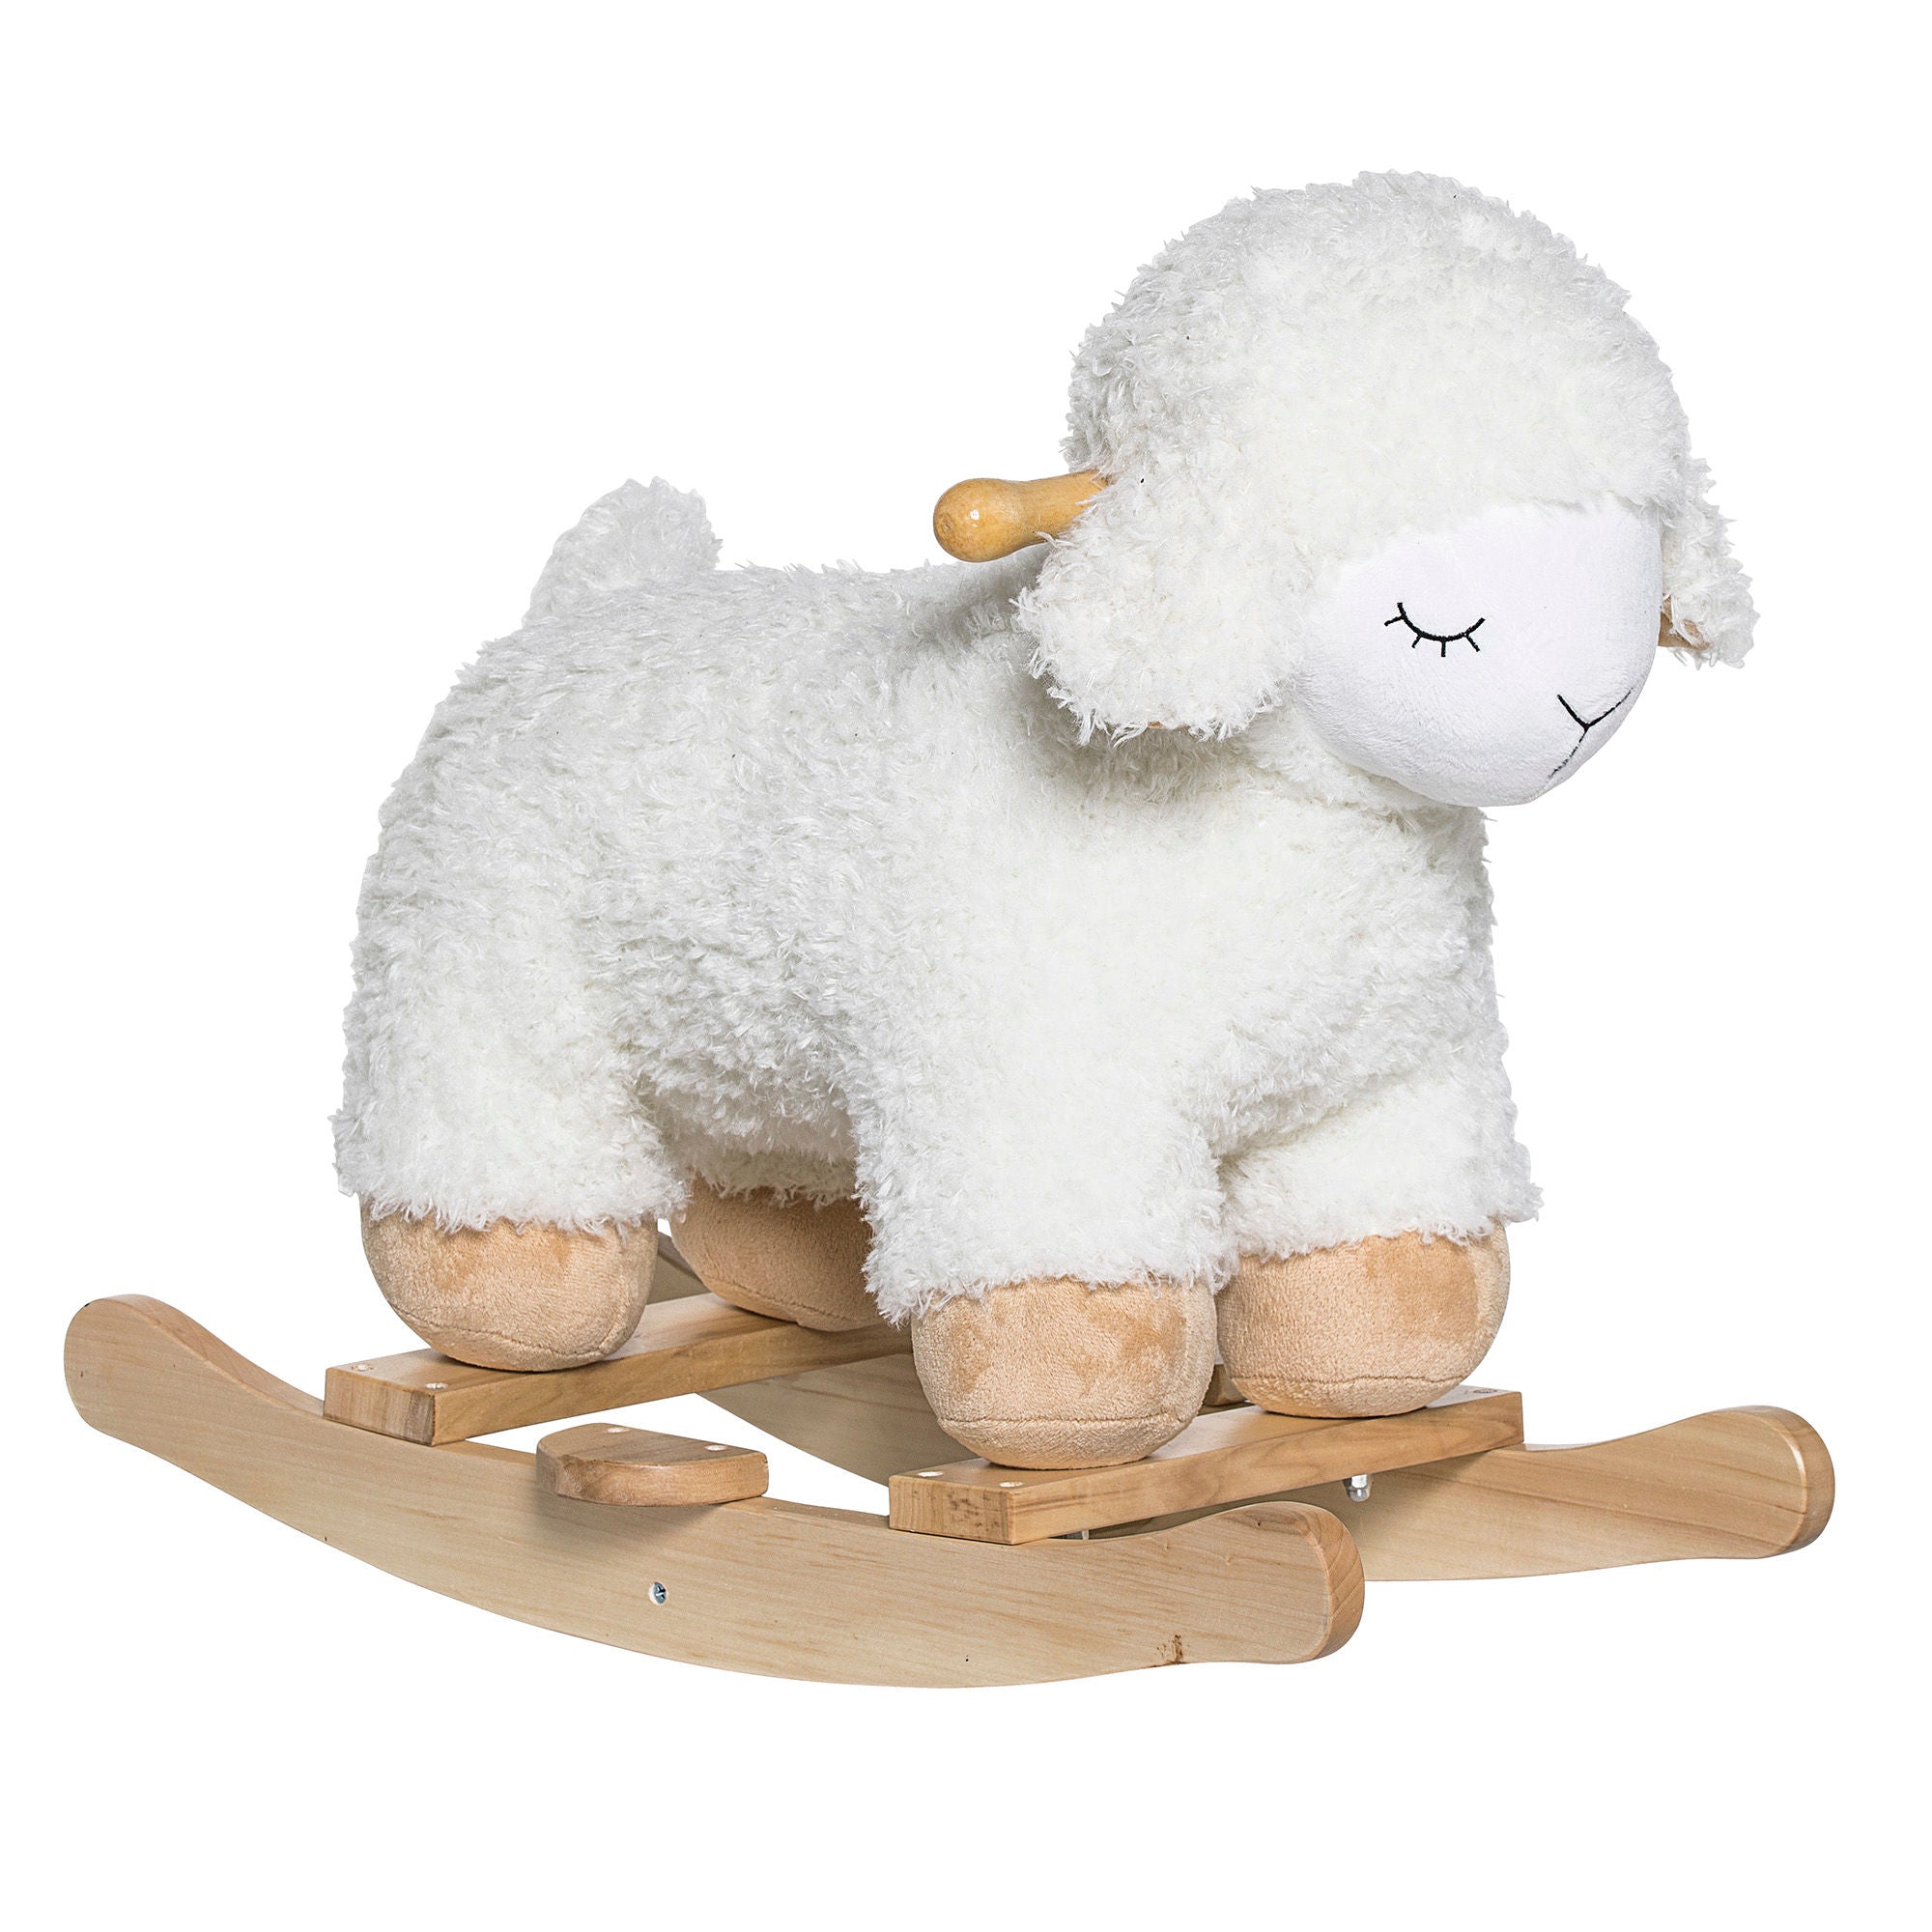 Bloomingville Mini Laasrith Rocking speelgoed, schapen, wit, polyester